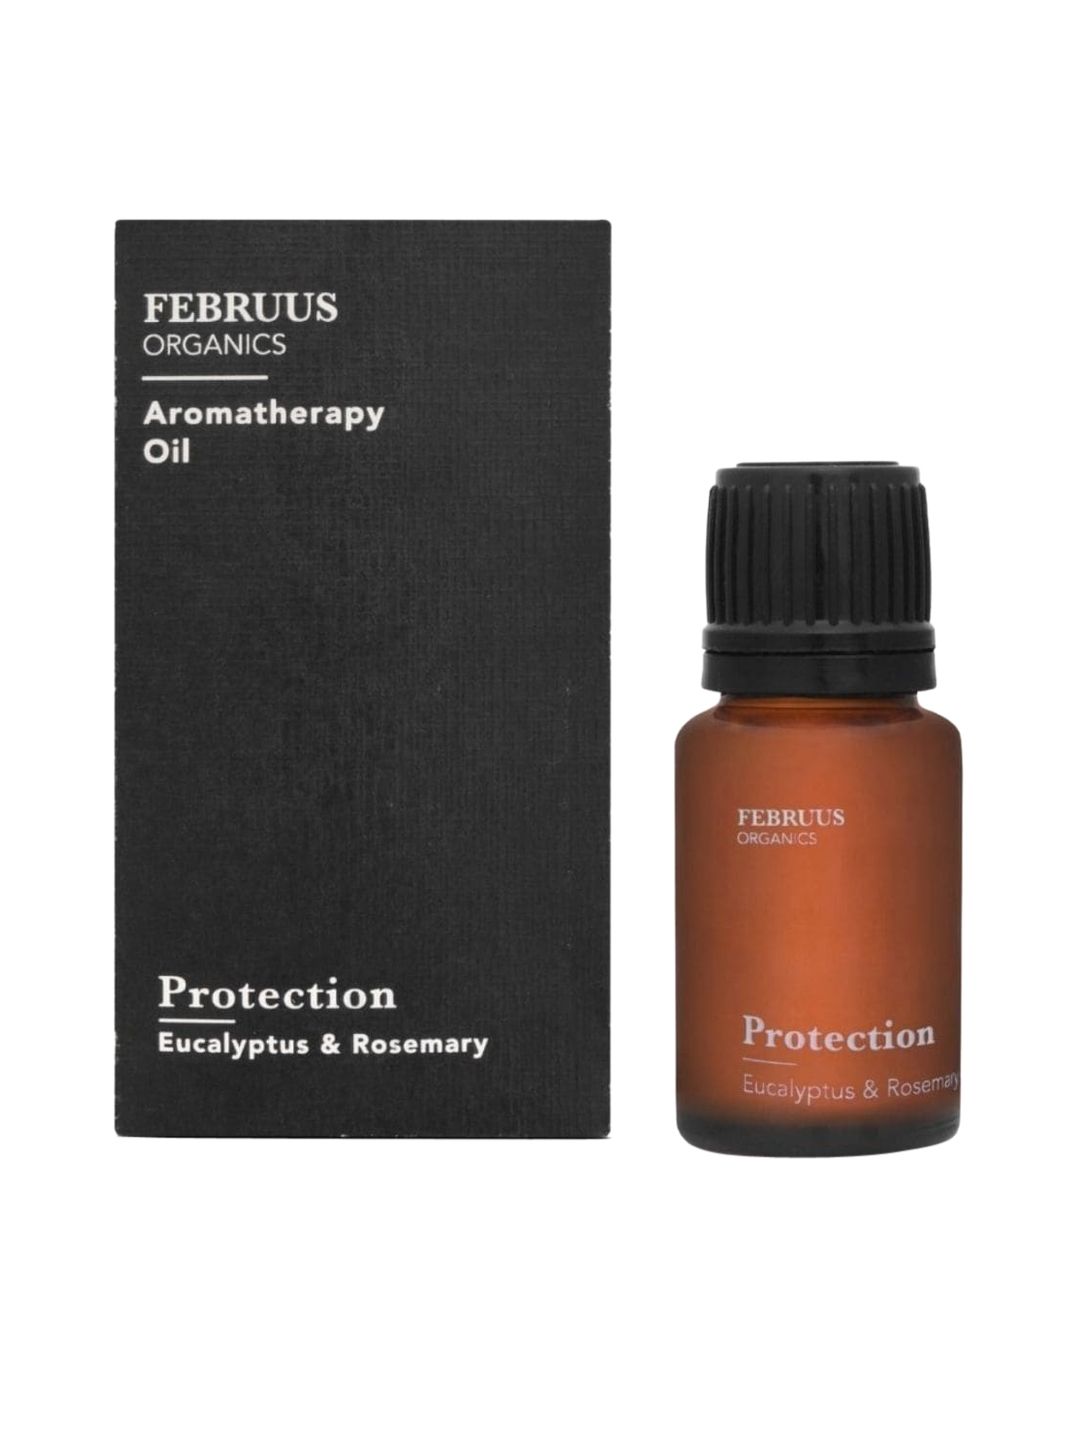 Februus Organics Protection Aromatherapy Oil Price in India